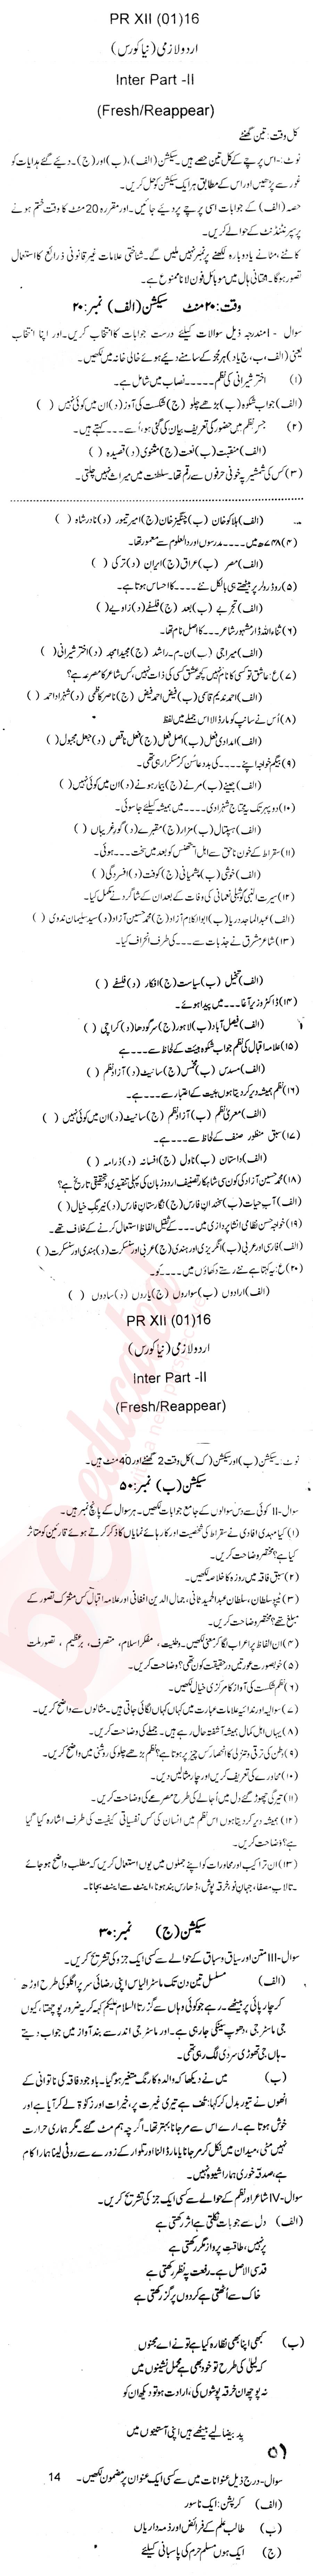 Urdu 12th class Past Paper Group 1 BISE Bannu 2016